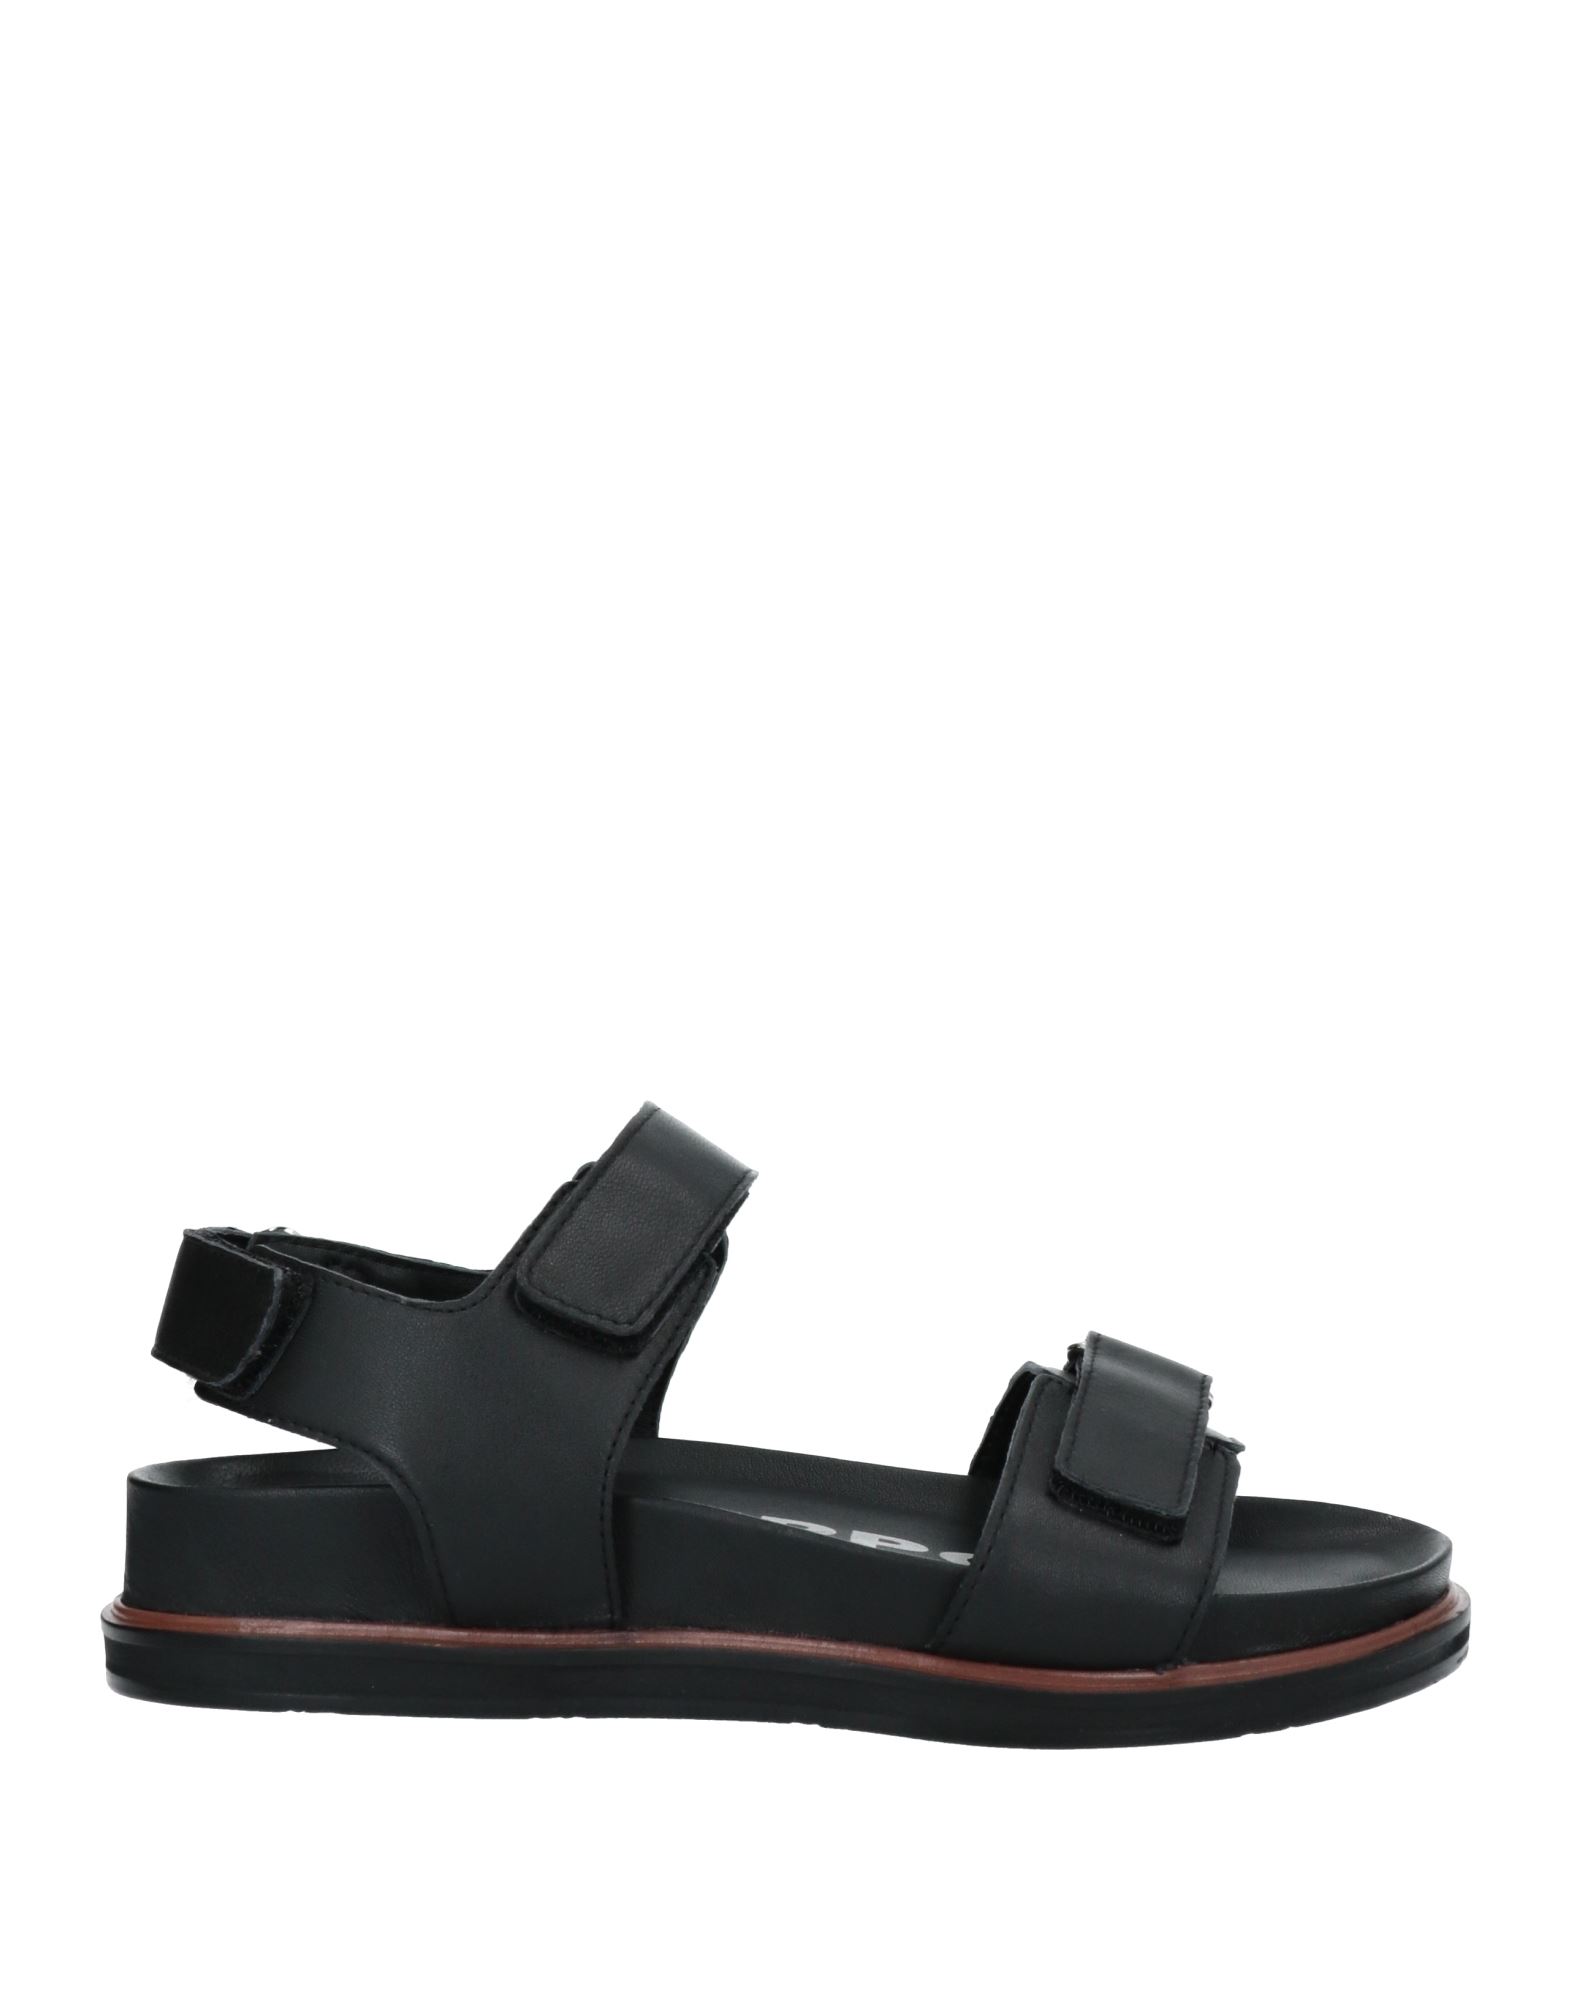 Gioseppo Sandals In Black